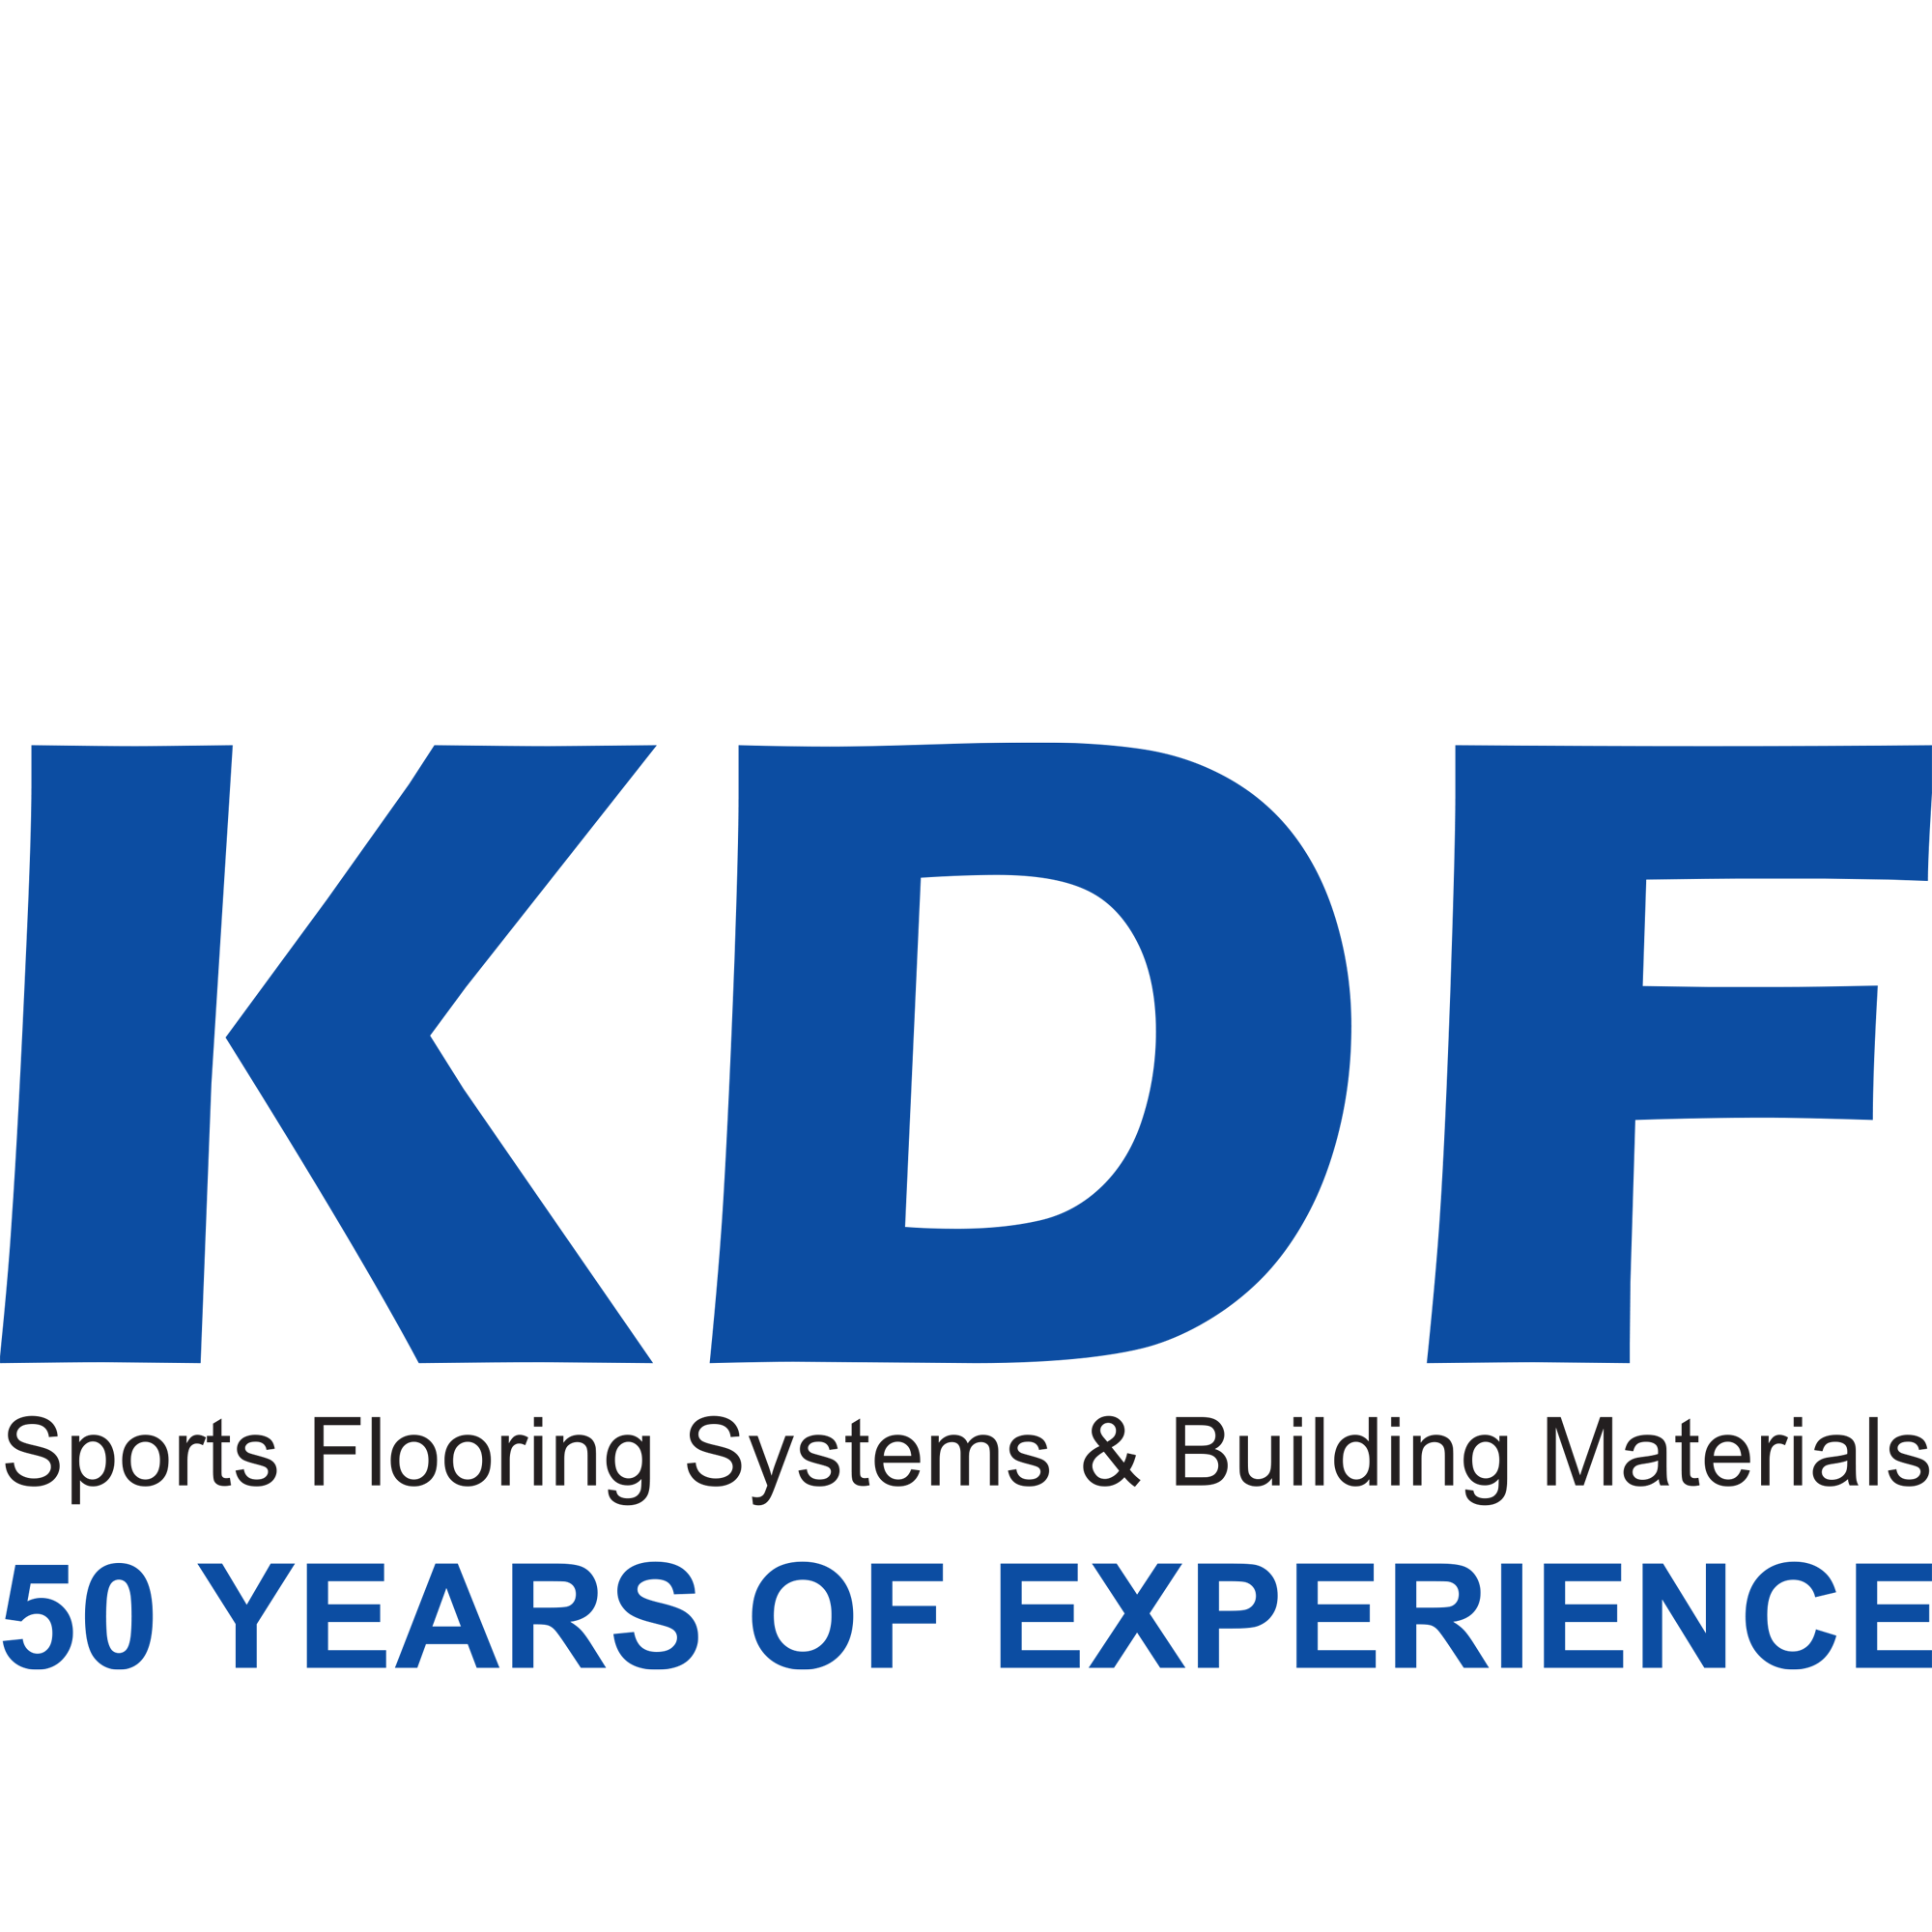 KDF_logo_3472.png